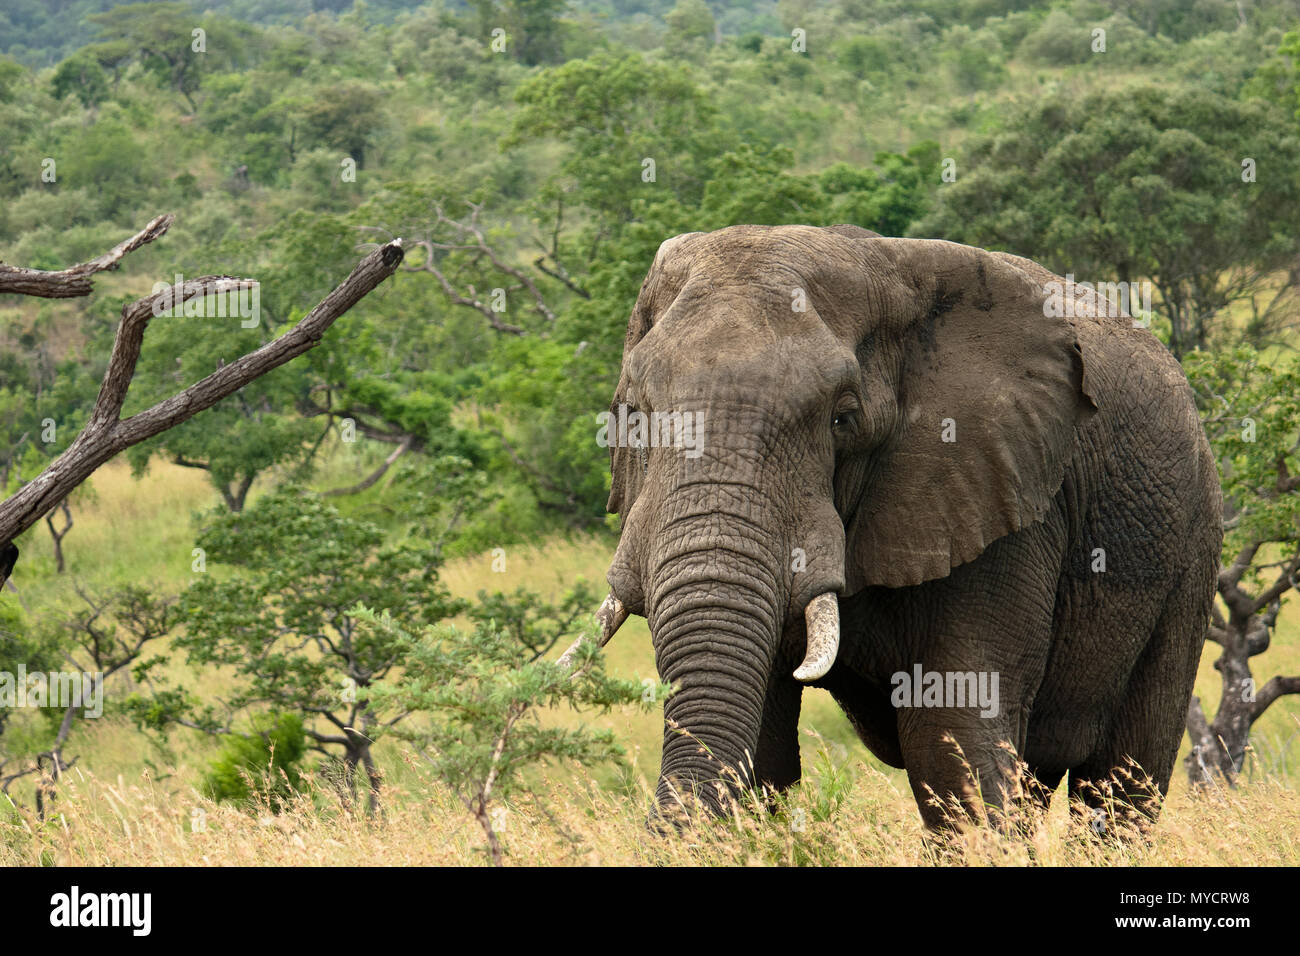 Kwazulu-Natal, South Africa: African Elephant bull in Savannah Stock Photo